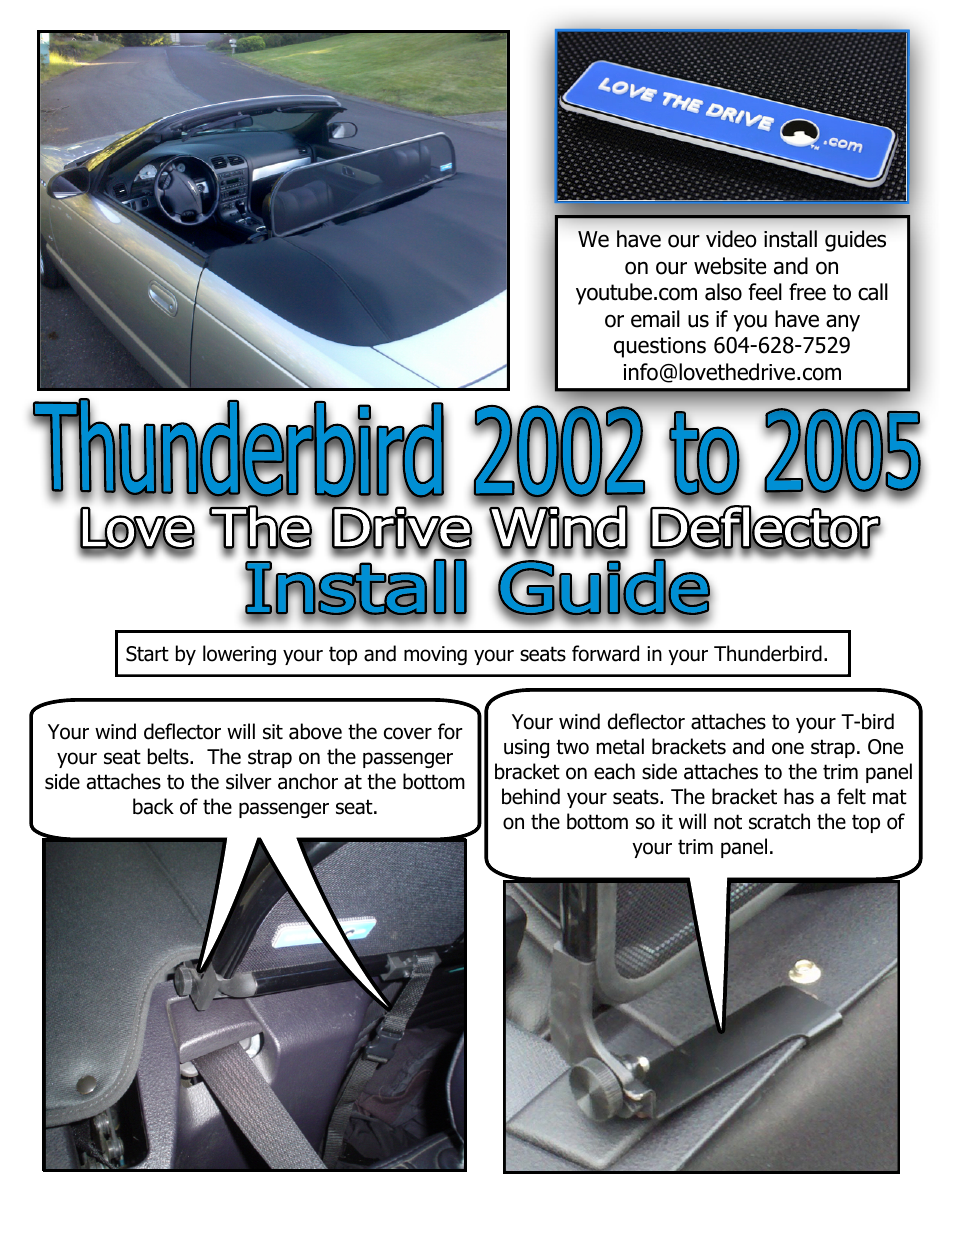 Thunderbird Wind Deflector 2002 to 2005